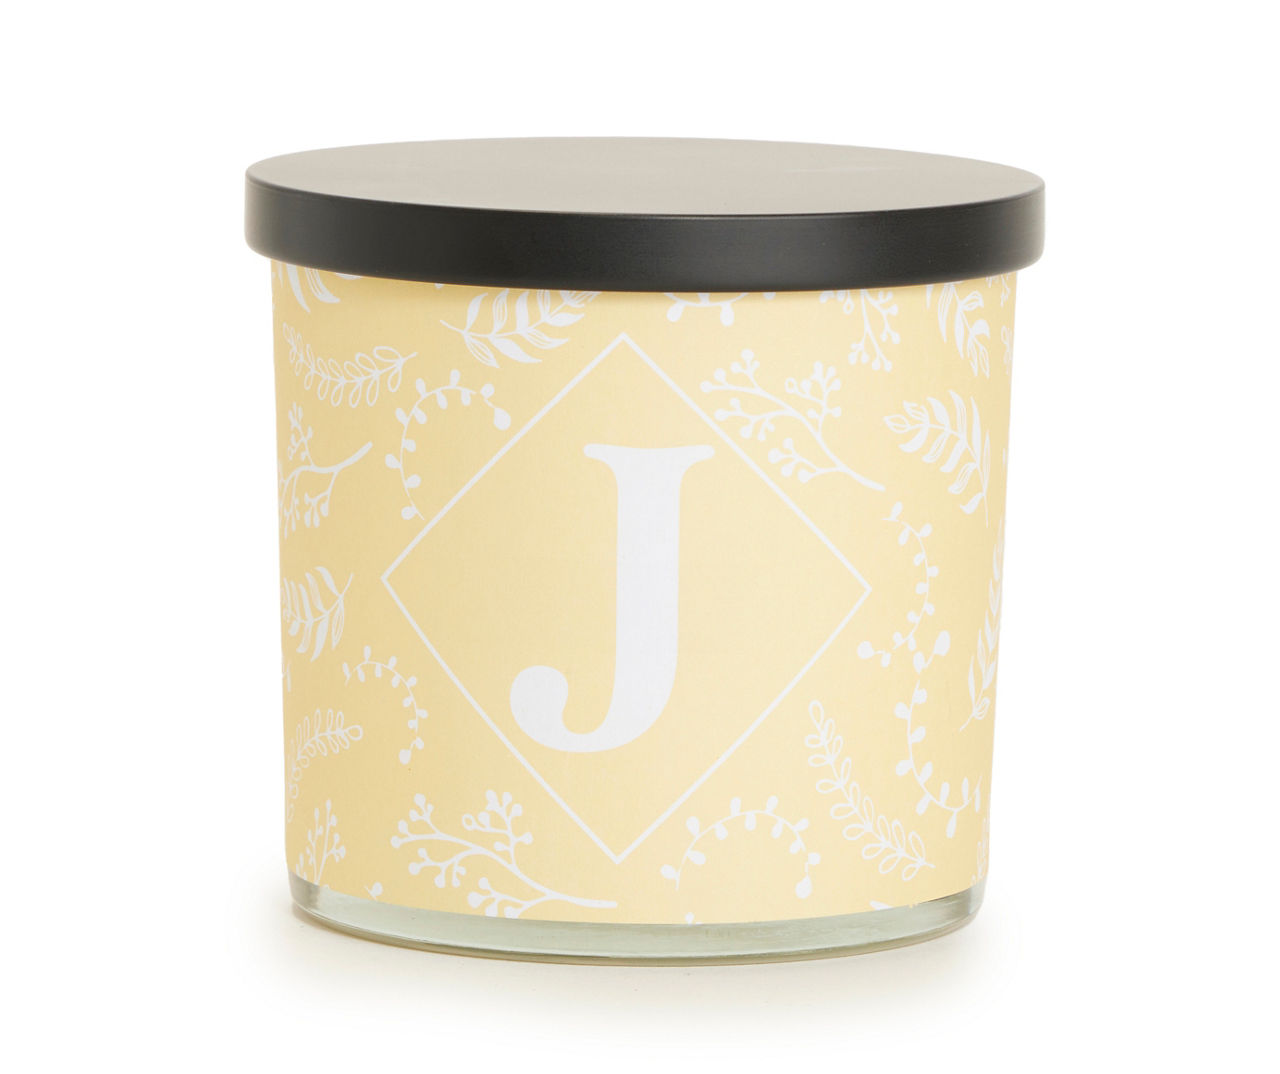 "J" Mandarin Honeysuckle Yellow & White Botanical Monogram Jar Candle, 14 oz.